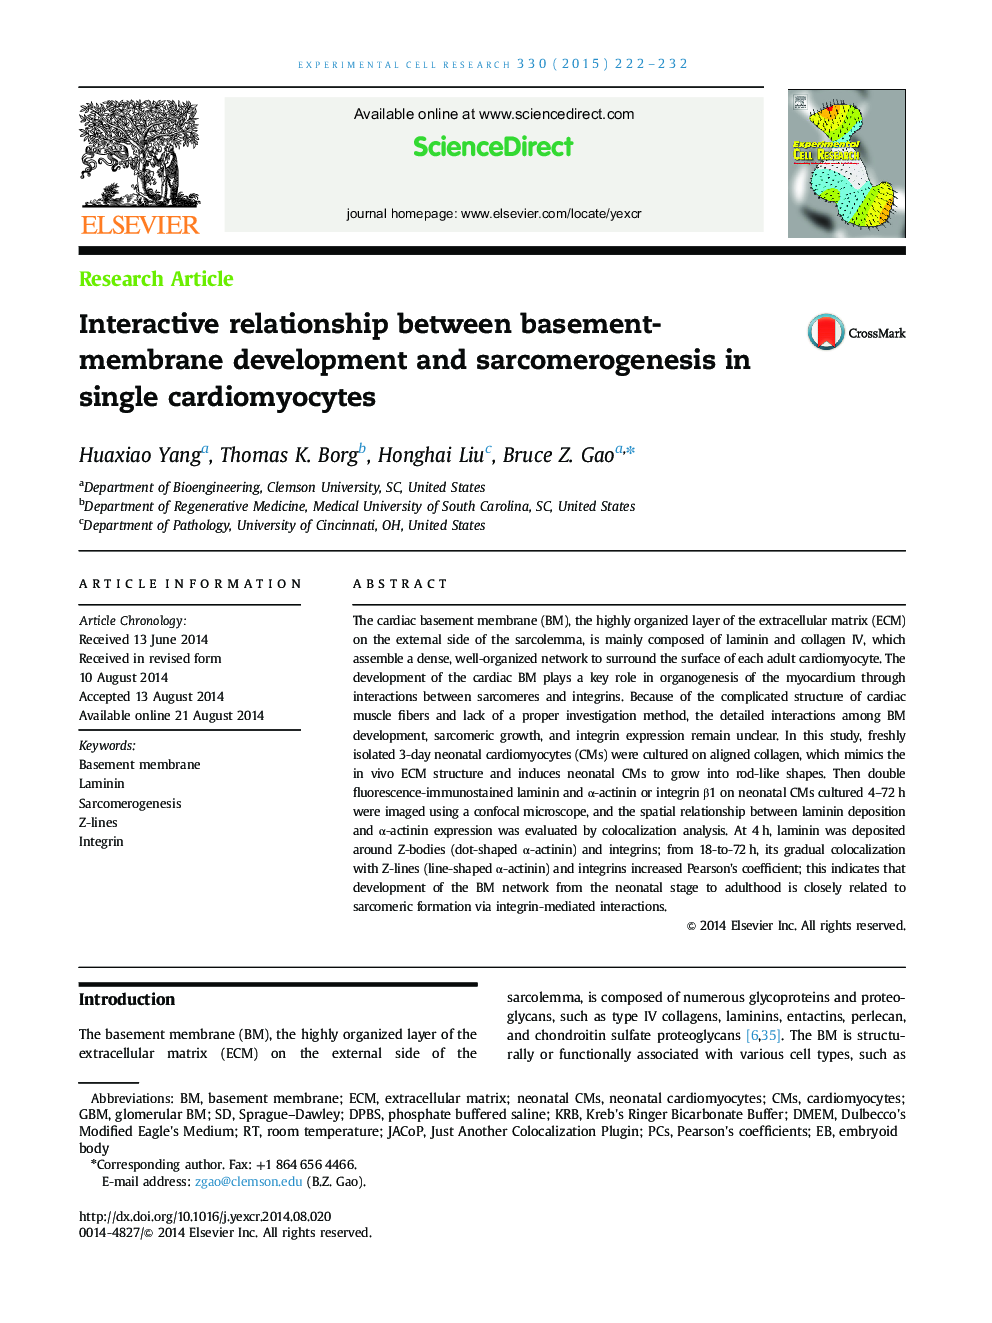 Interactive relationship between basement-membrane development and sarcomerogenesis in single cardiomyocytes